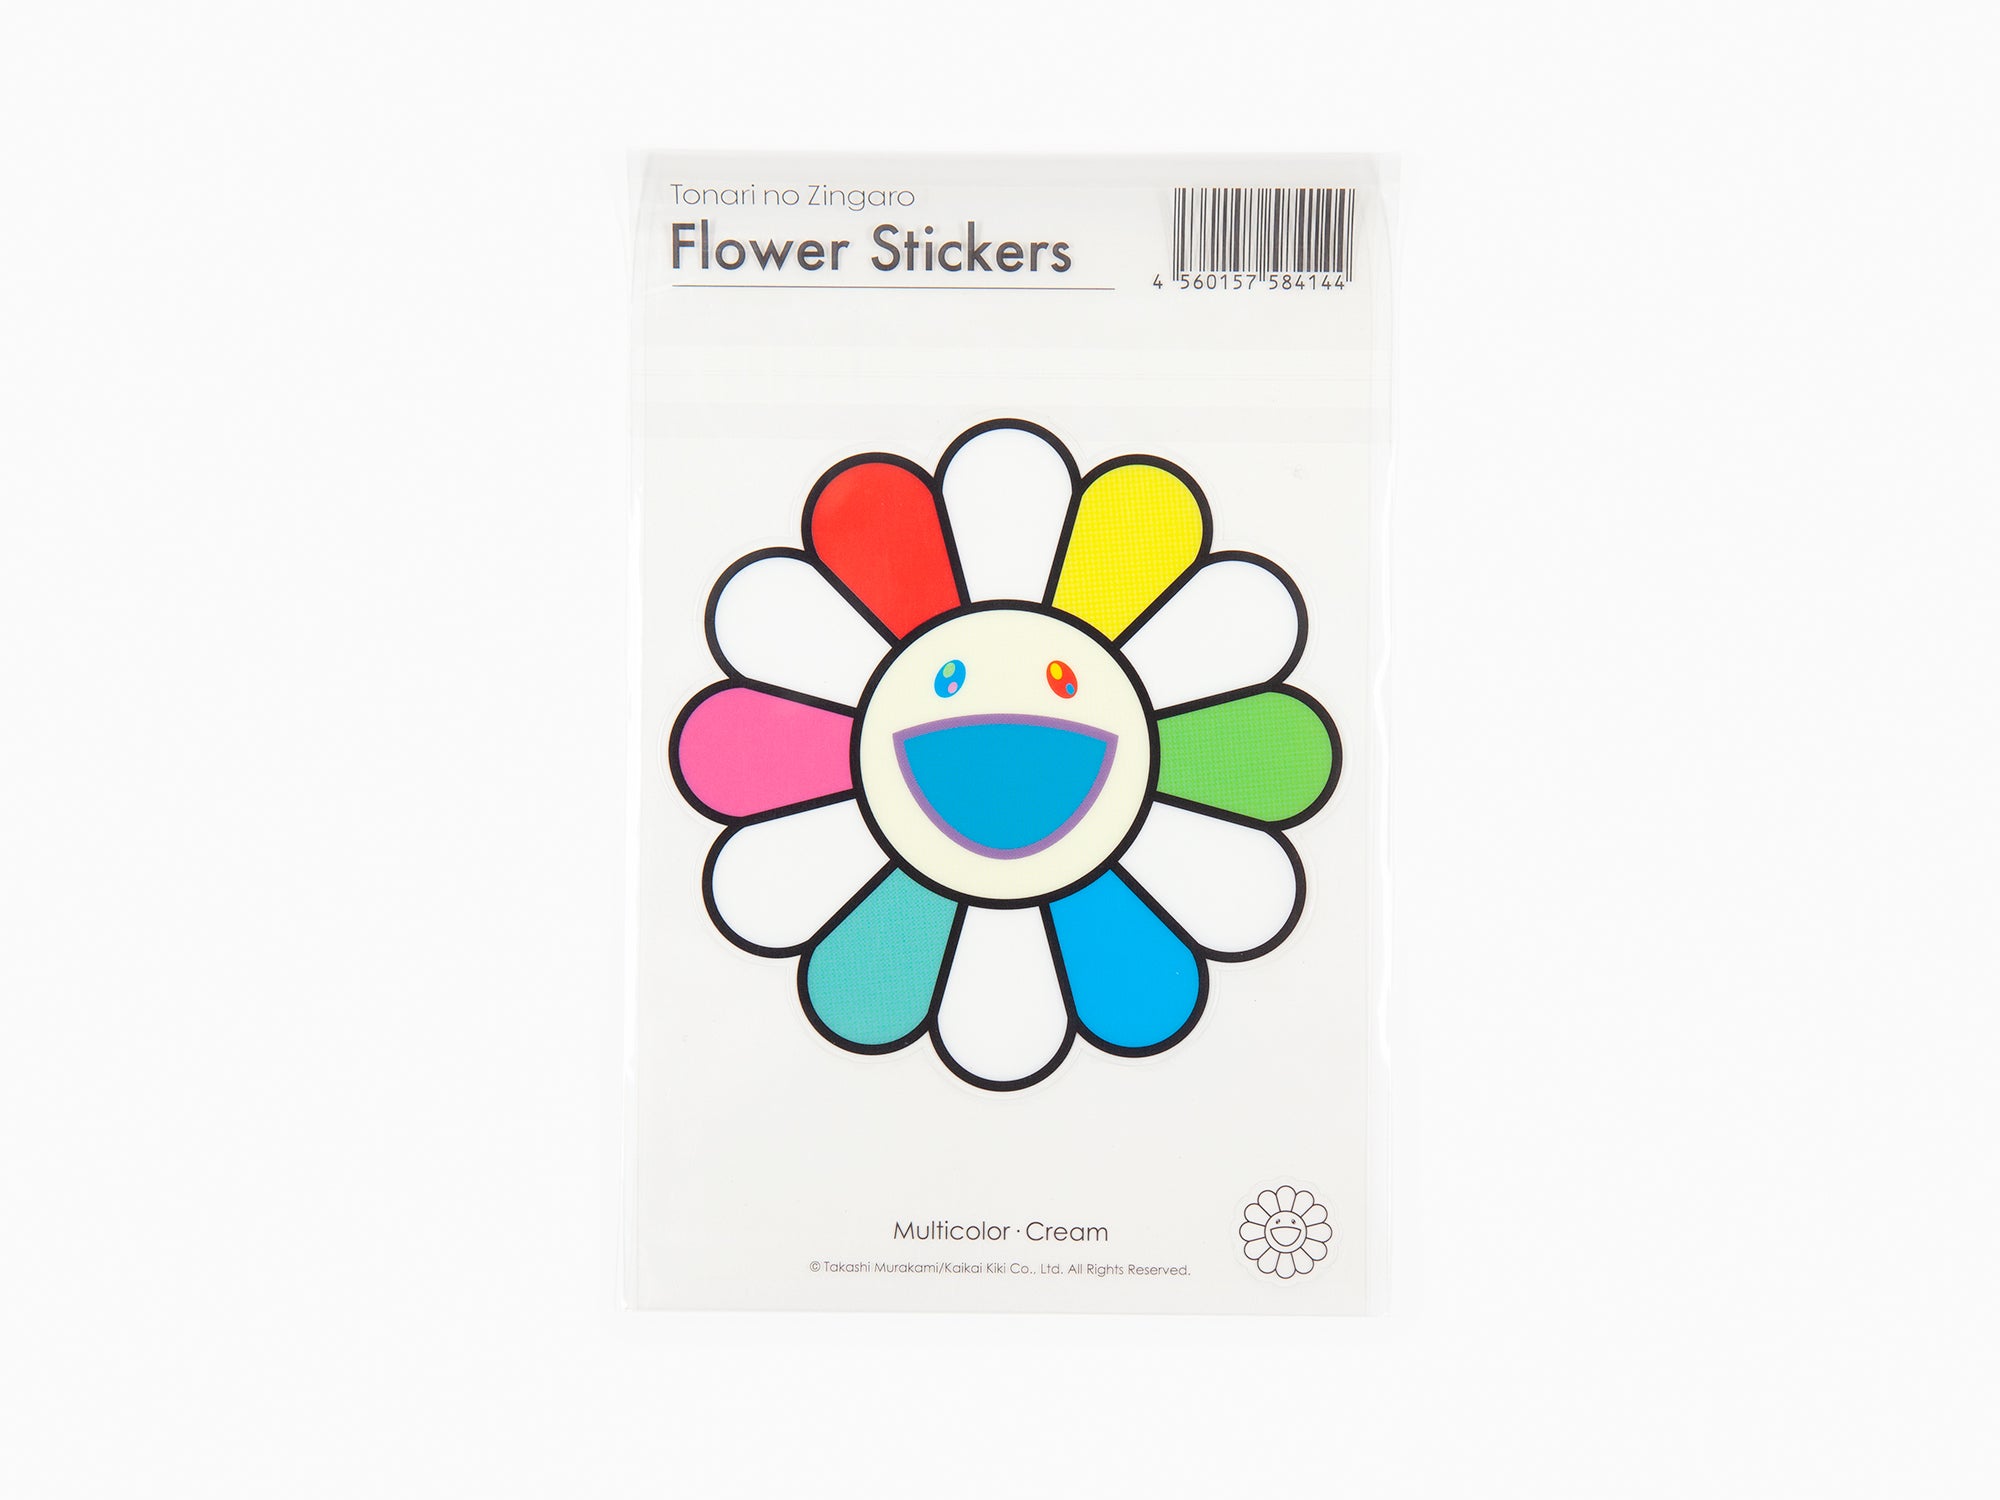 Takashi Murakami - Flower Stickers - Multicolor x Cream